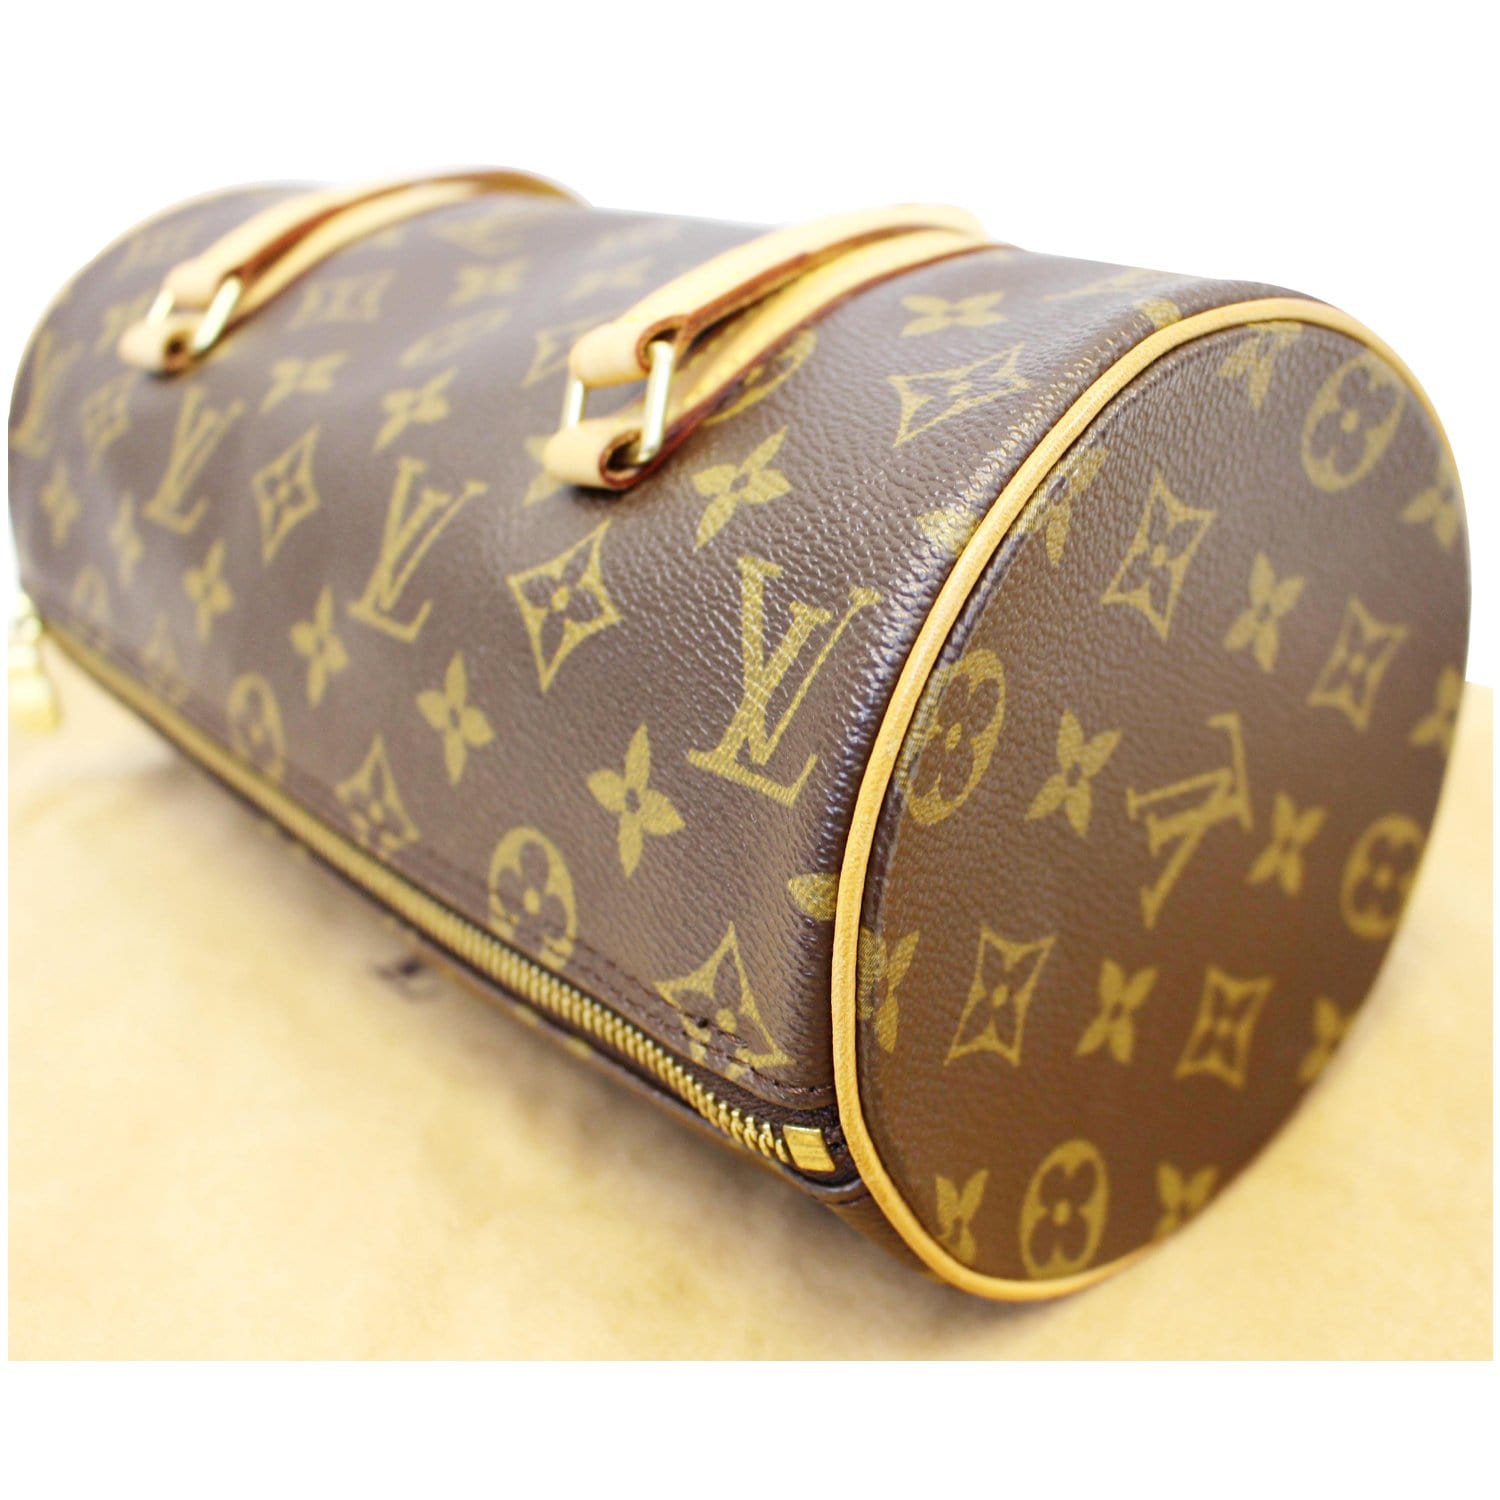 used Louis Vuitton Sd0093 Handbags